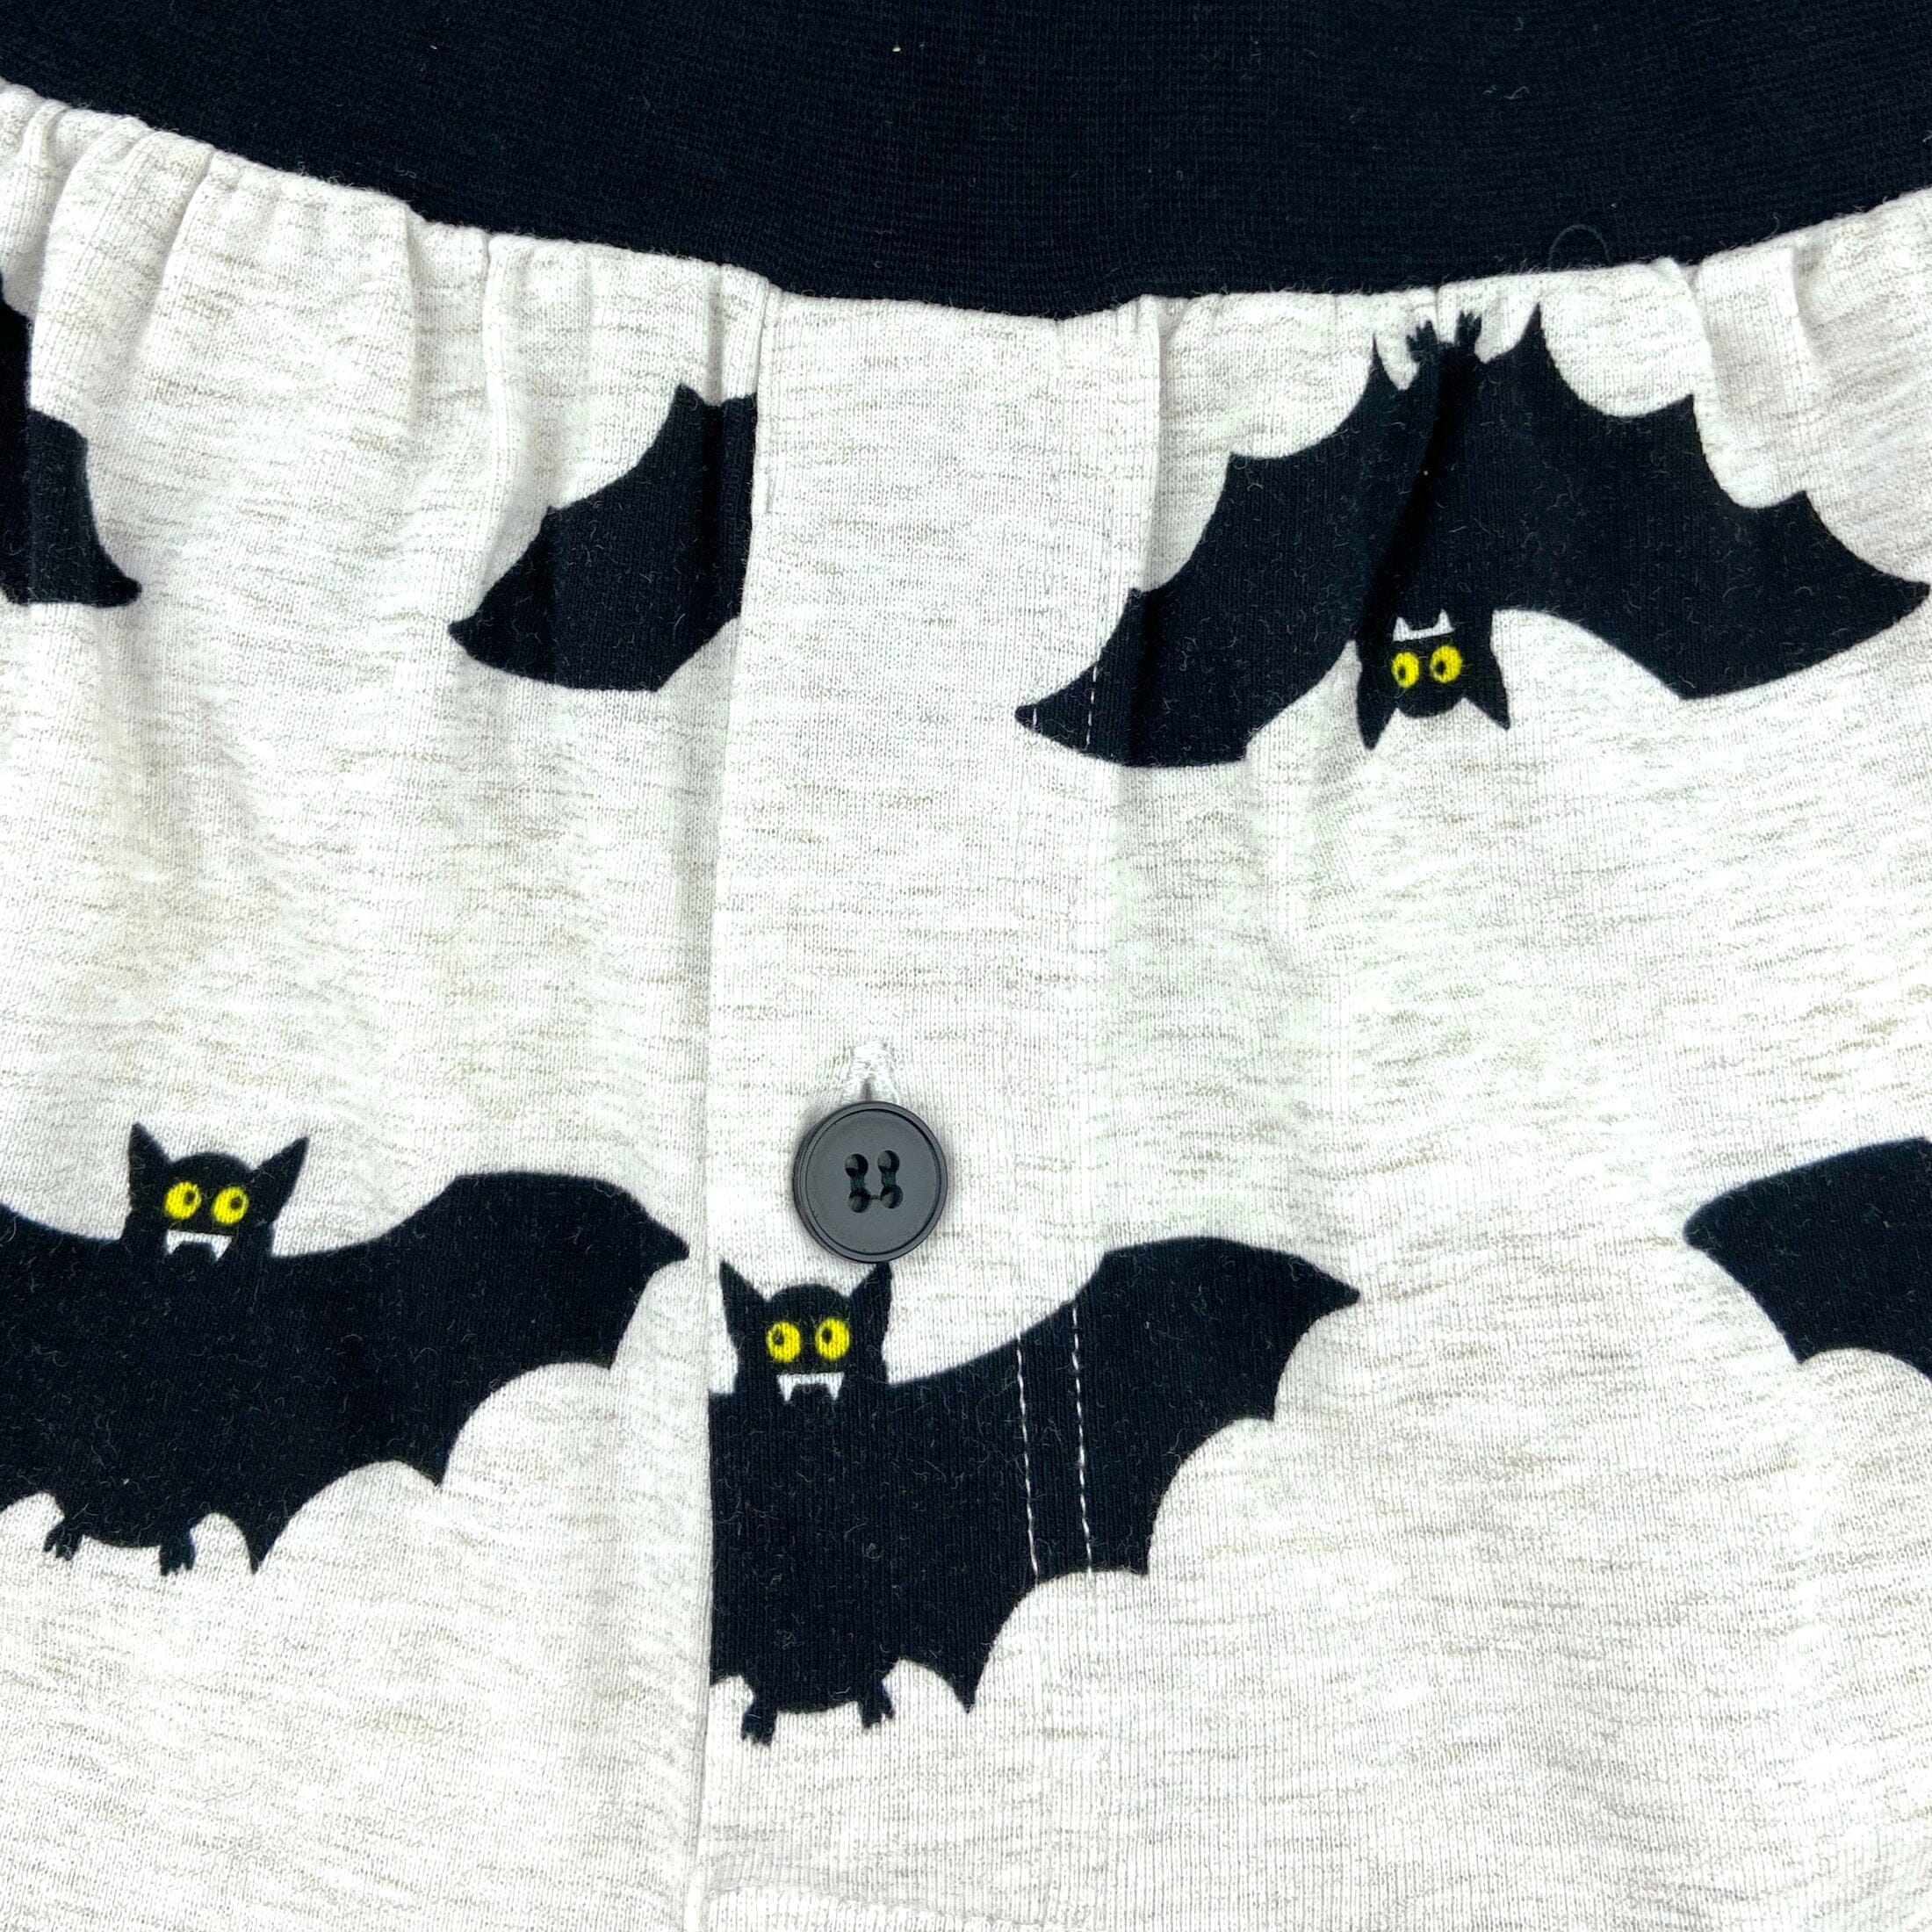 Men's Sleepwear. Super Comfy Bat Patterned Cotton Boxer Pajama Shorts